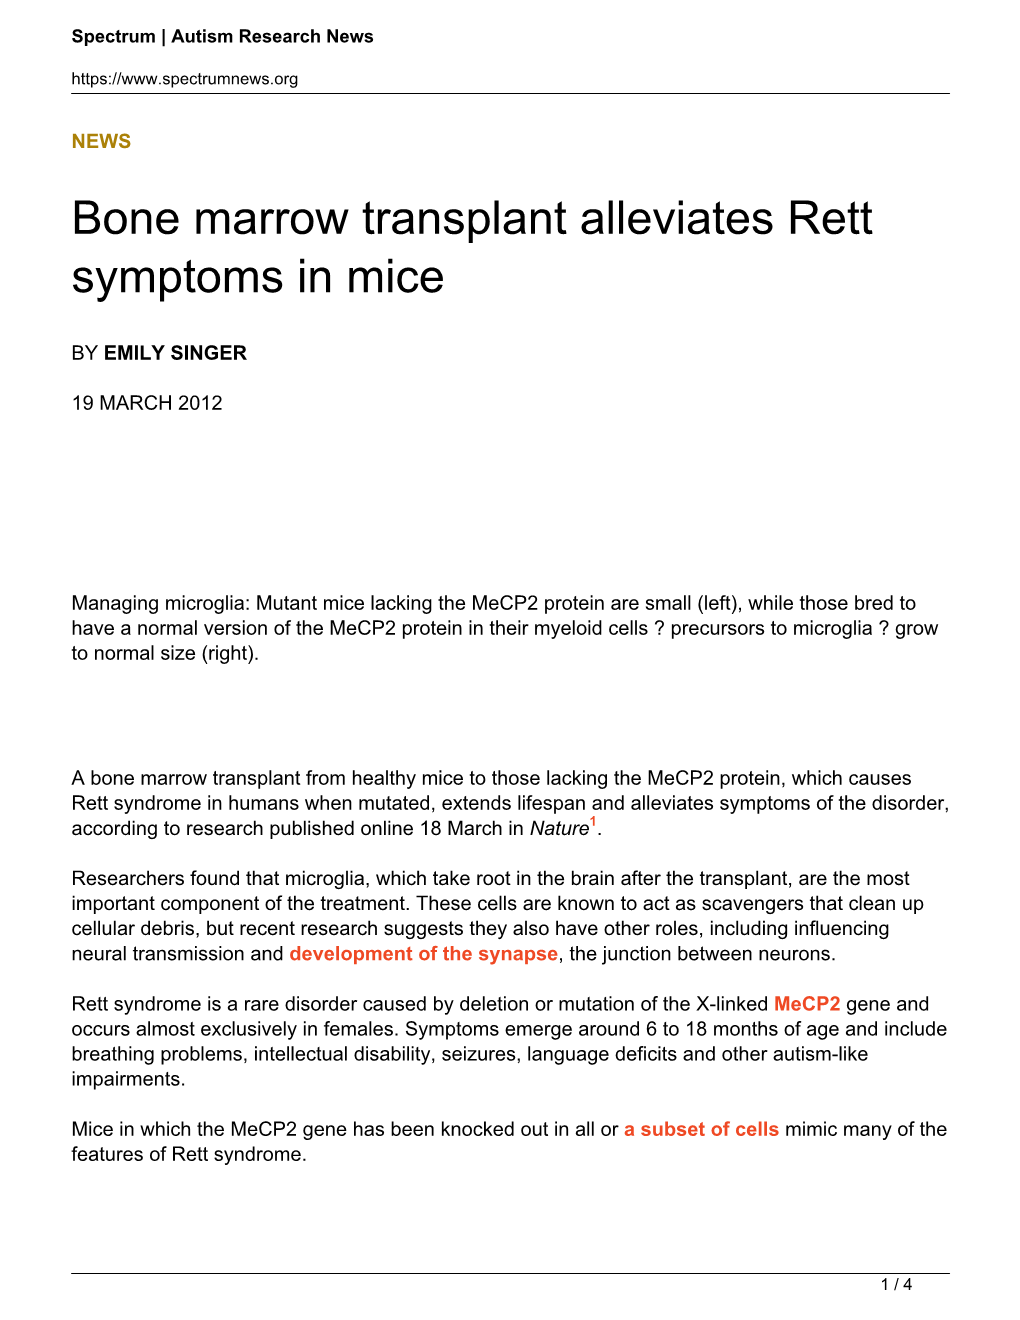 Bone Marrow Transplant Alleviates Rett Symptoms in Mice